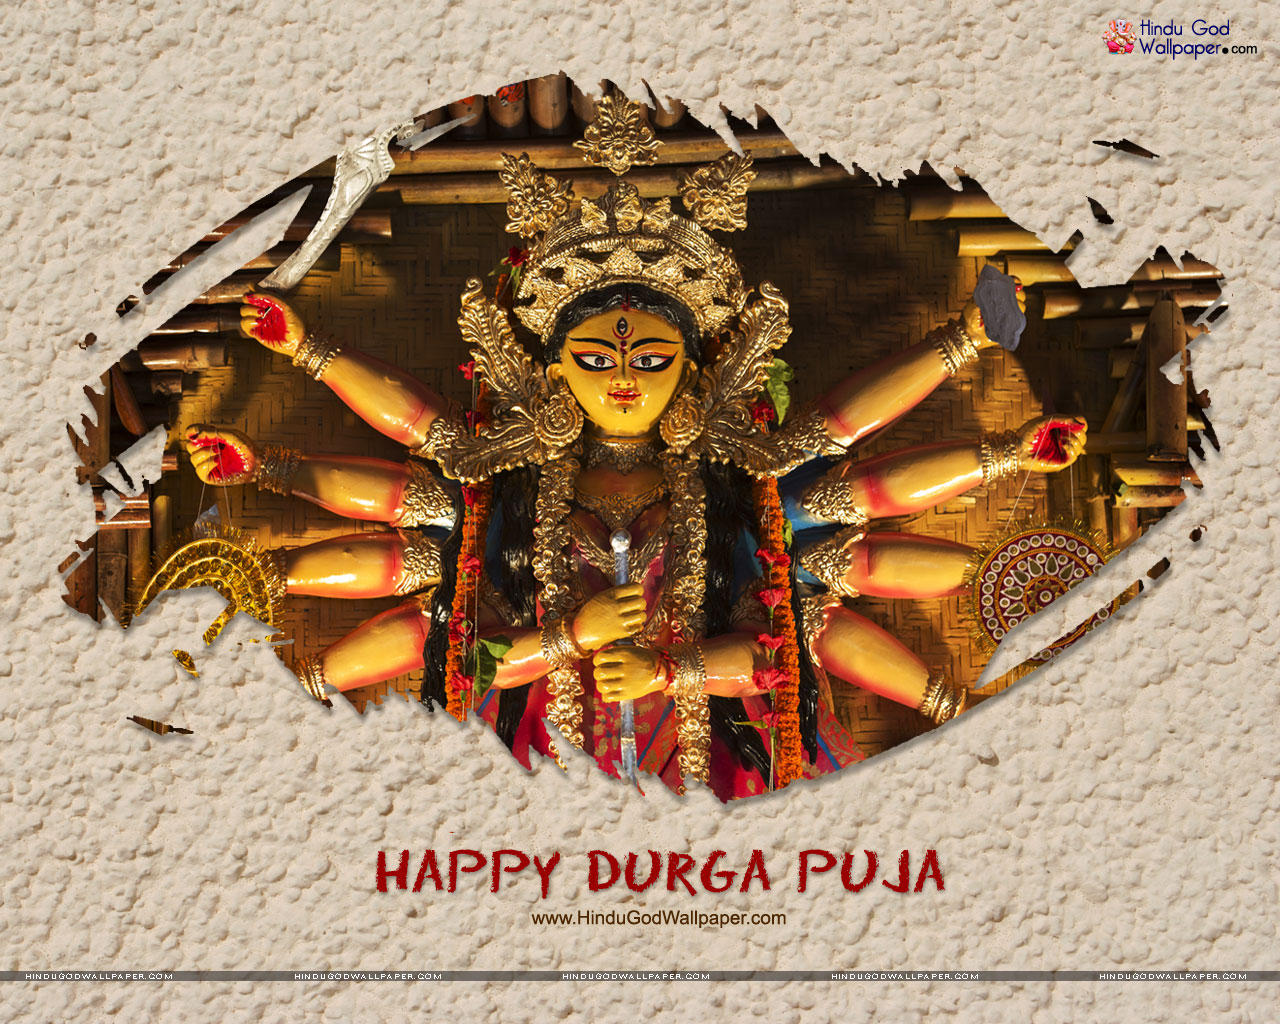 Durga Puja Wallpapers, Photos & Image Galleries